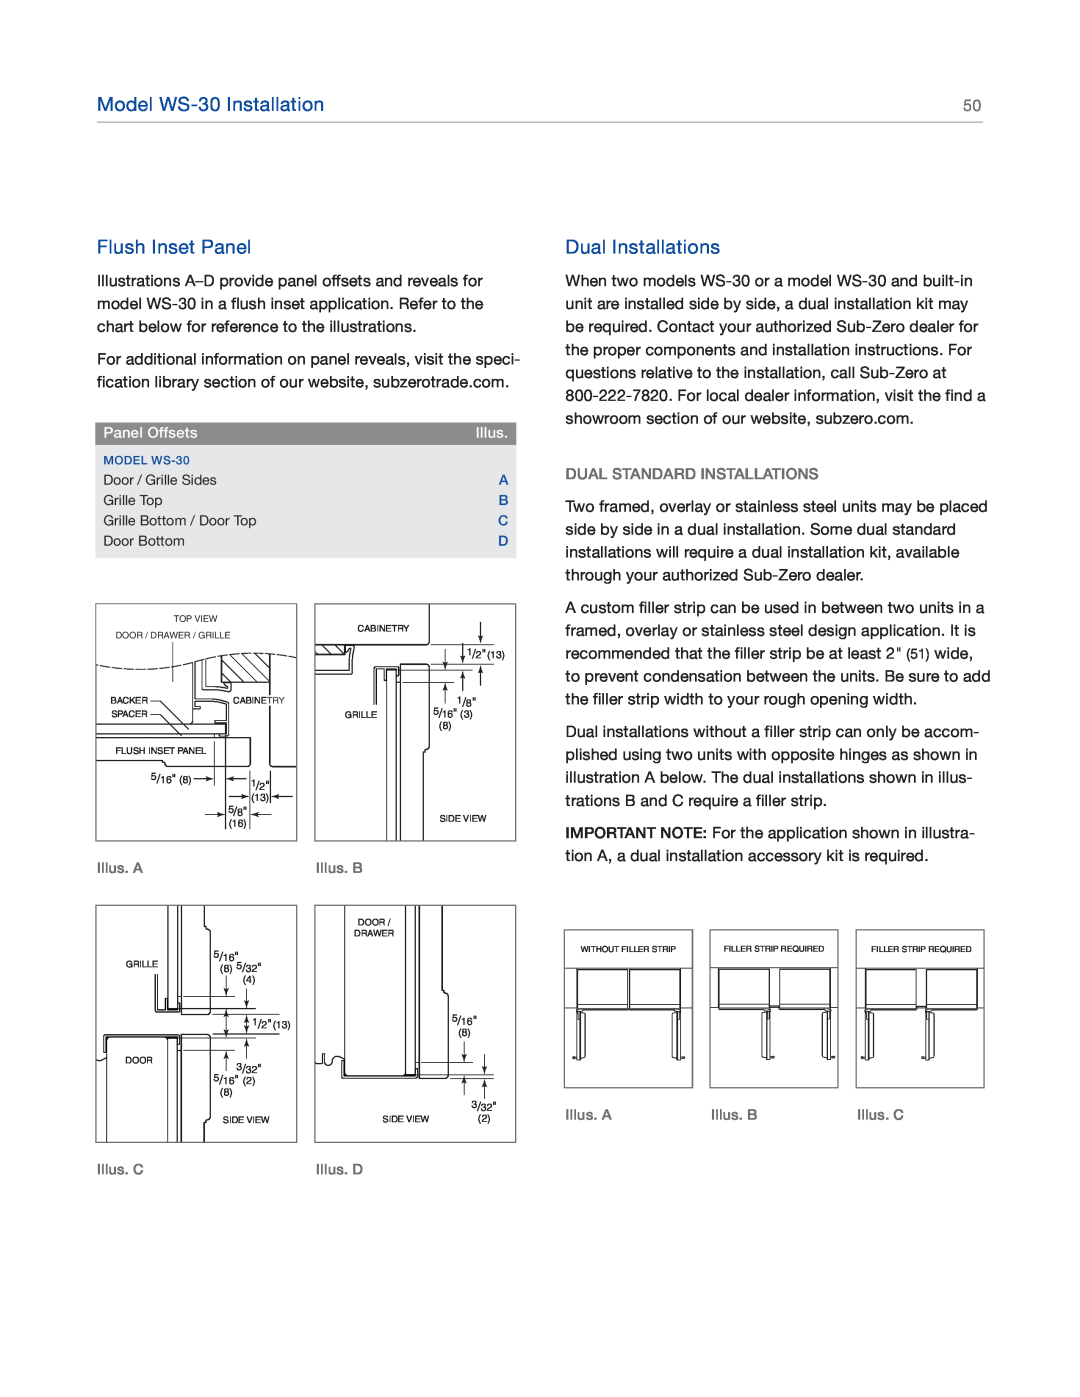 Sub-Zero 424FSG Flush Inset Panel, Dual Installations, Dual Standard Installations, Model WS-30 Installation, Grille Top 